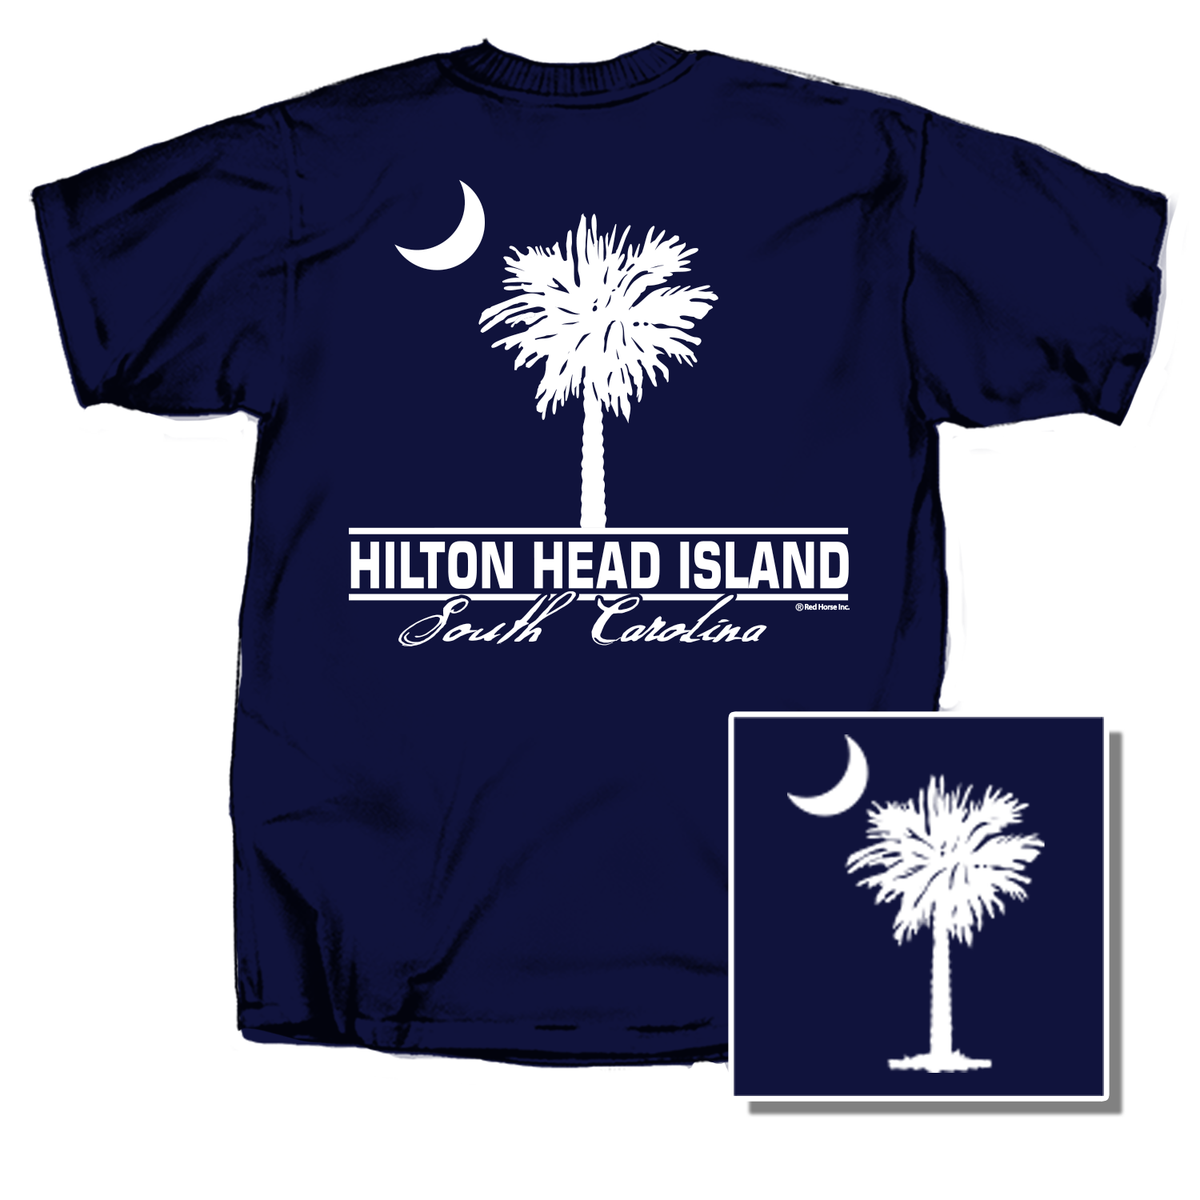 Hilton Head Island Palm Front and Back Short Sleeve T-Shirt